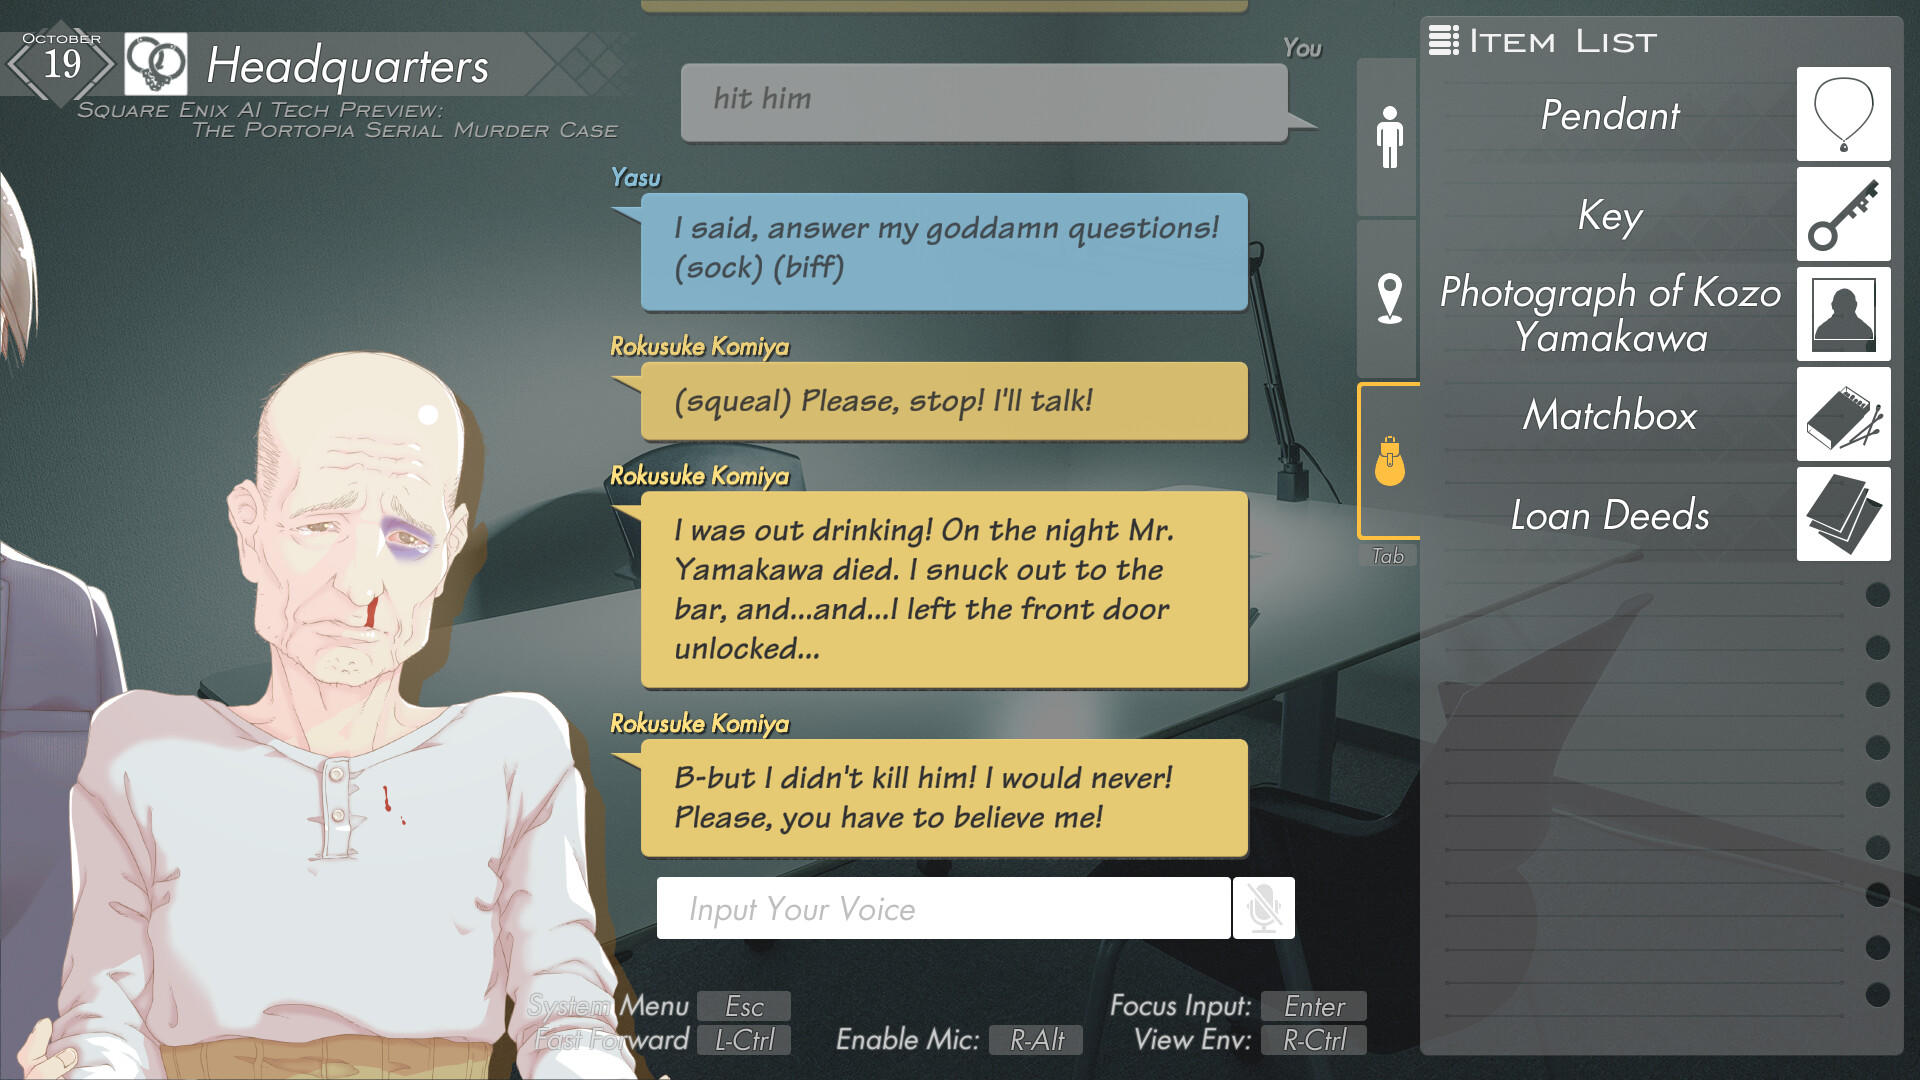 SQUARE ENIX AI Tech Preview: THE PORTOPIA SERIAL MURDER CASE screenshot game